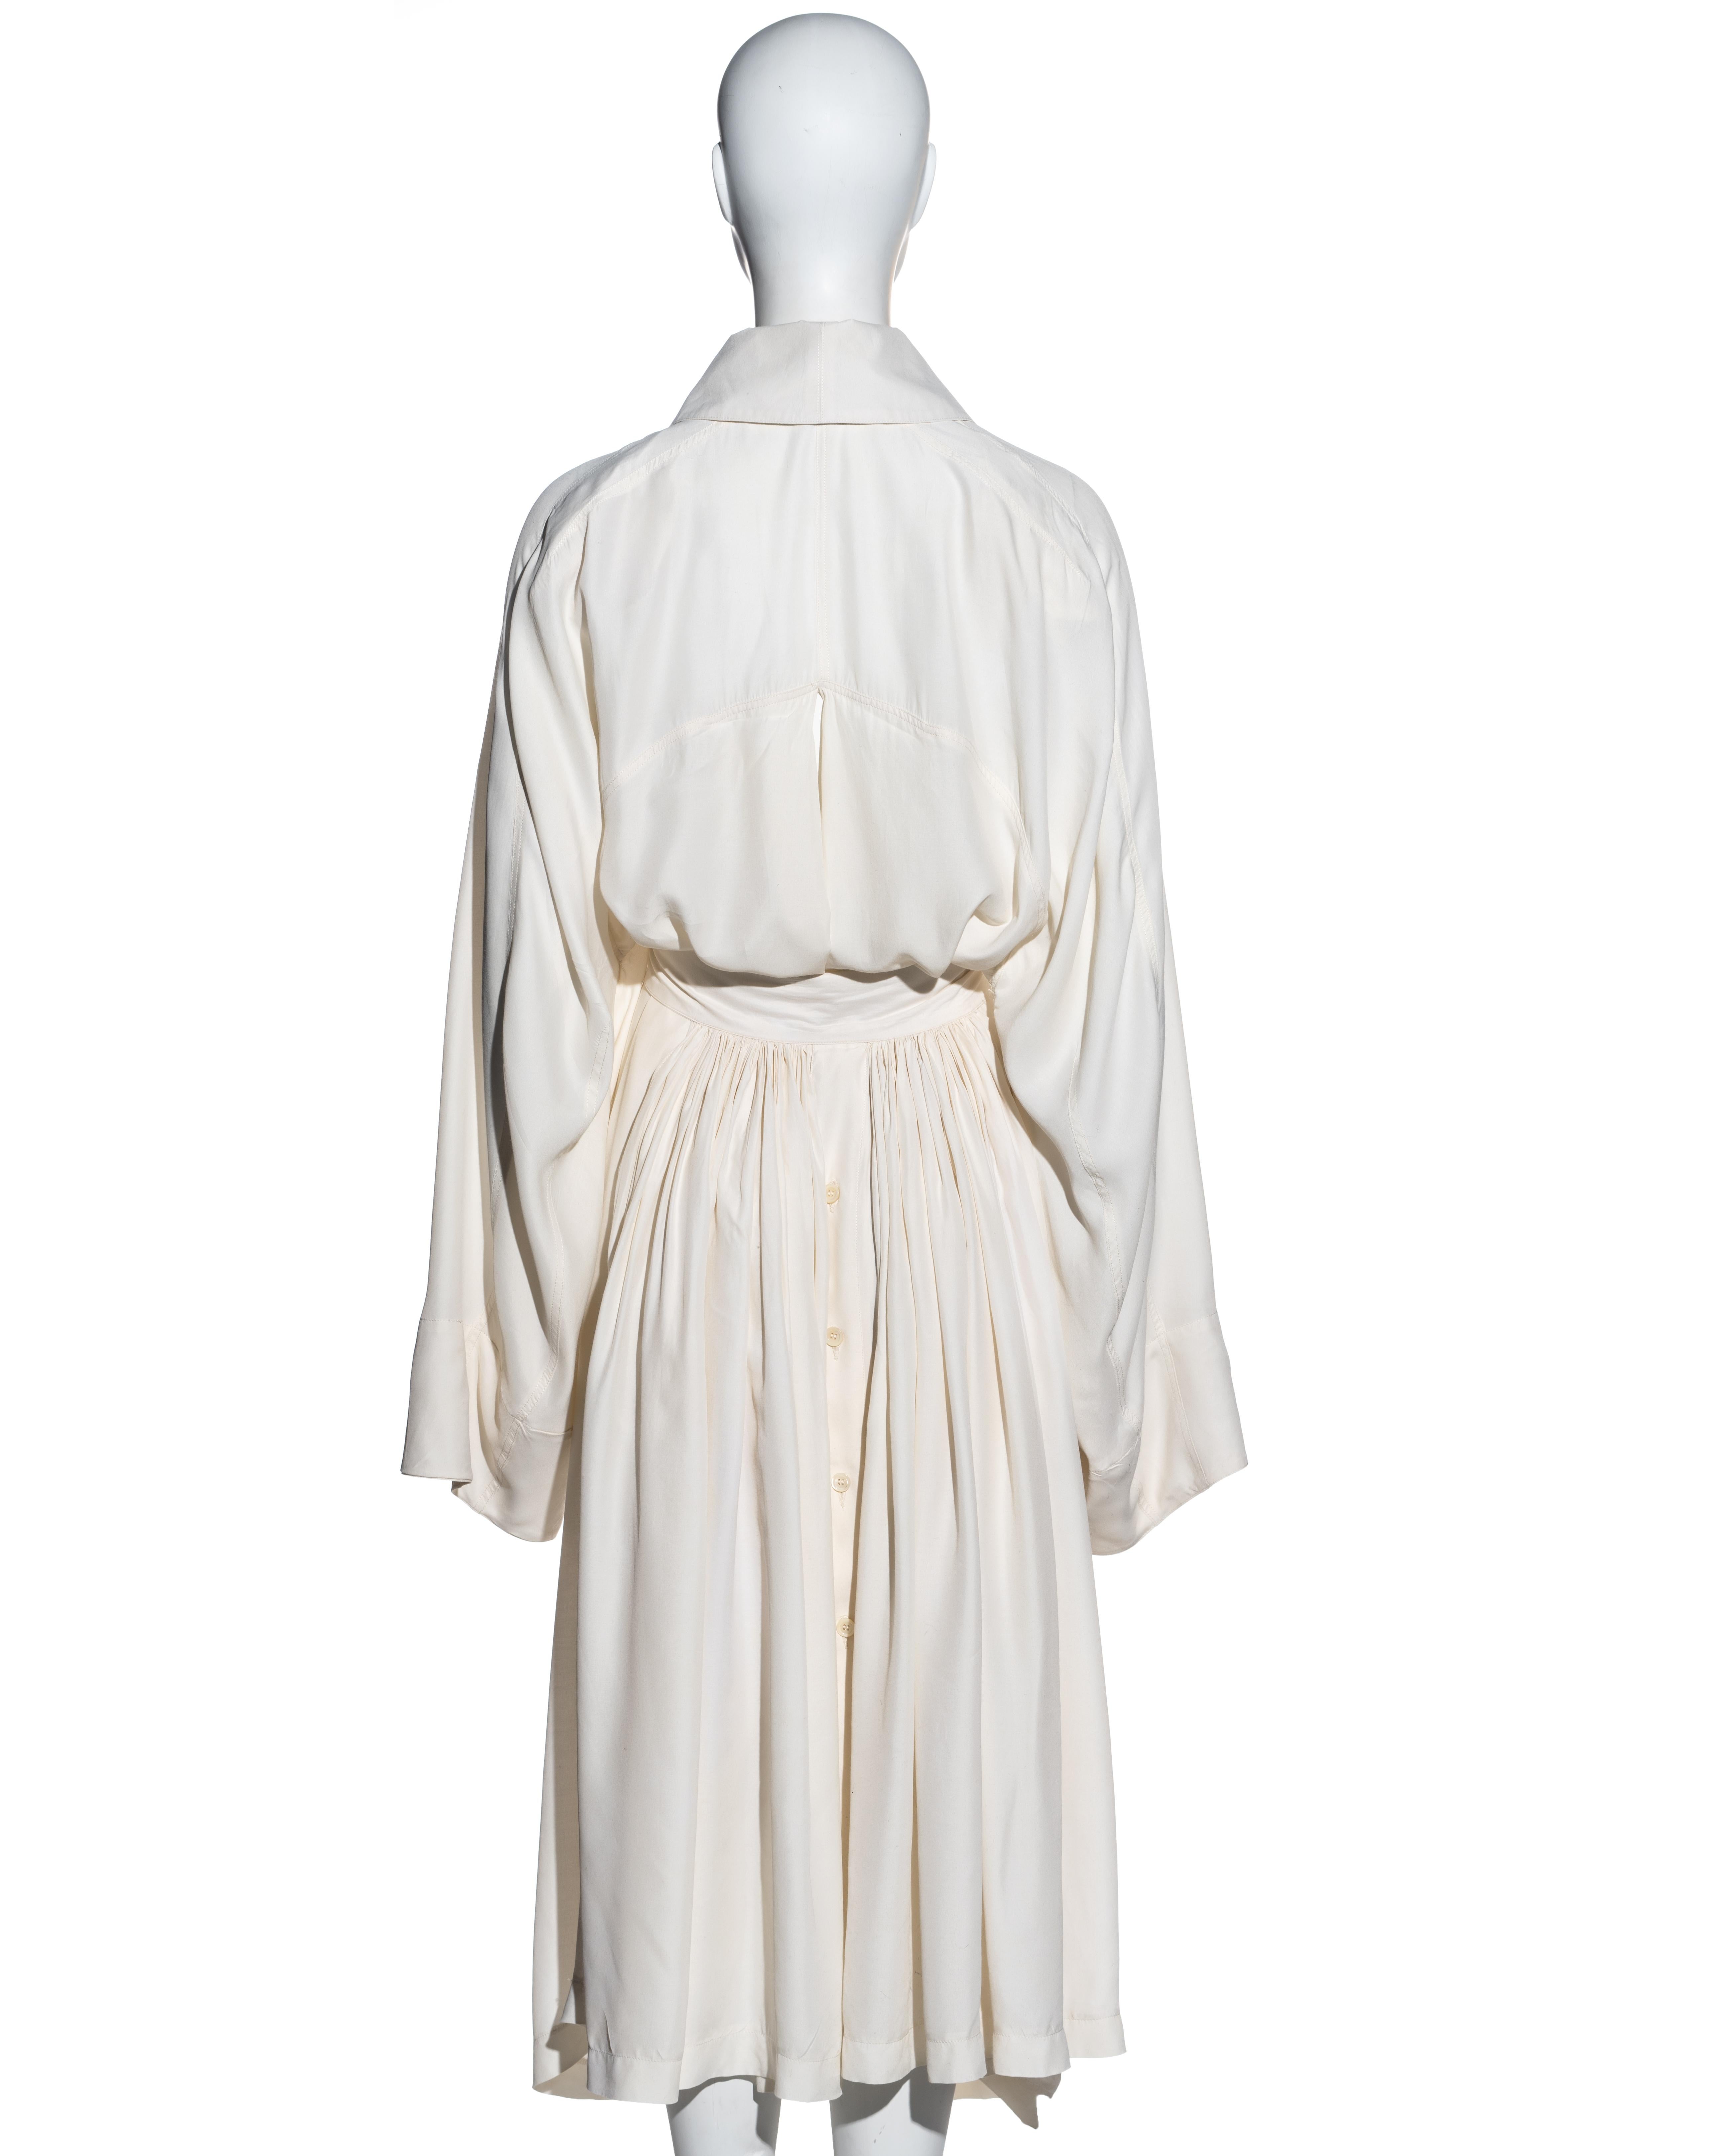 Azzedine Alaia cream cotton pleated coat dress, ss 1985 For Sale 2